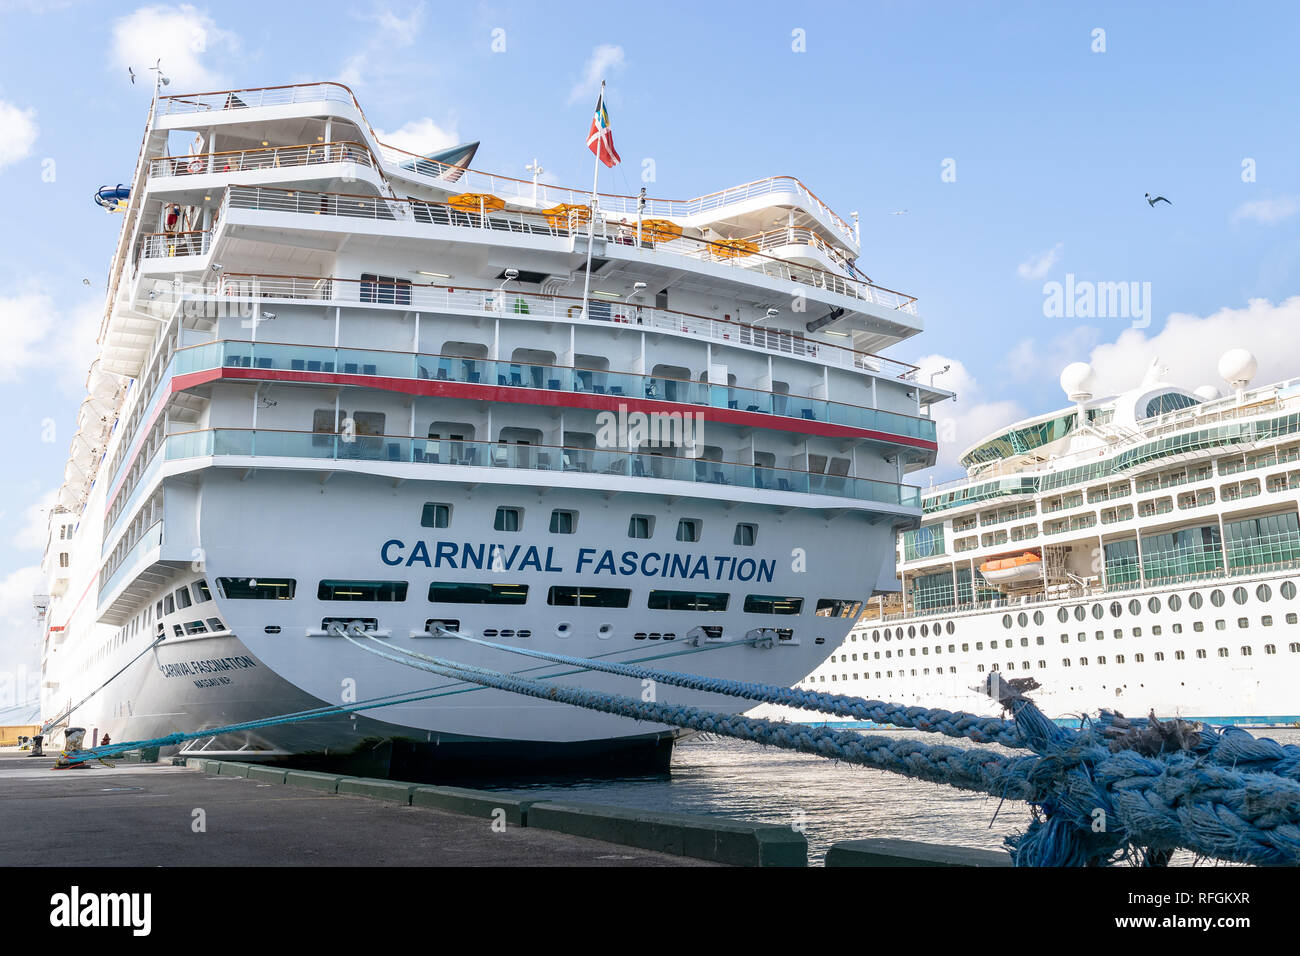 Nassau, Bahamas - 02. Dezember 2015: Carnival Fascination Kreuzfahrtschiff in Nassau Hafen angedockt im Prince George Wharf Stockfoto